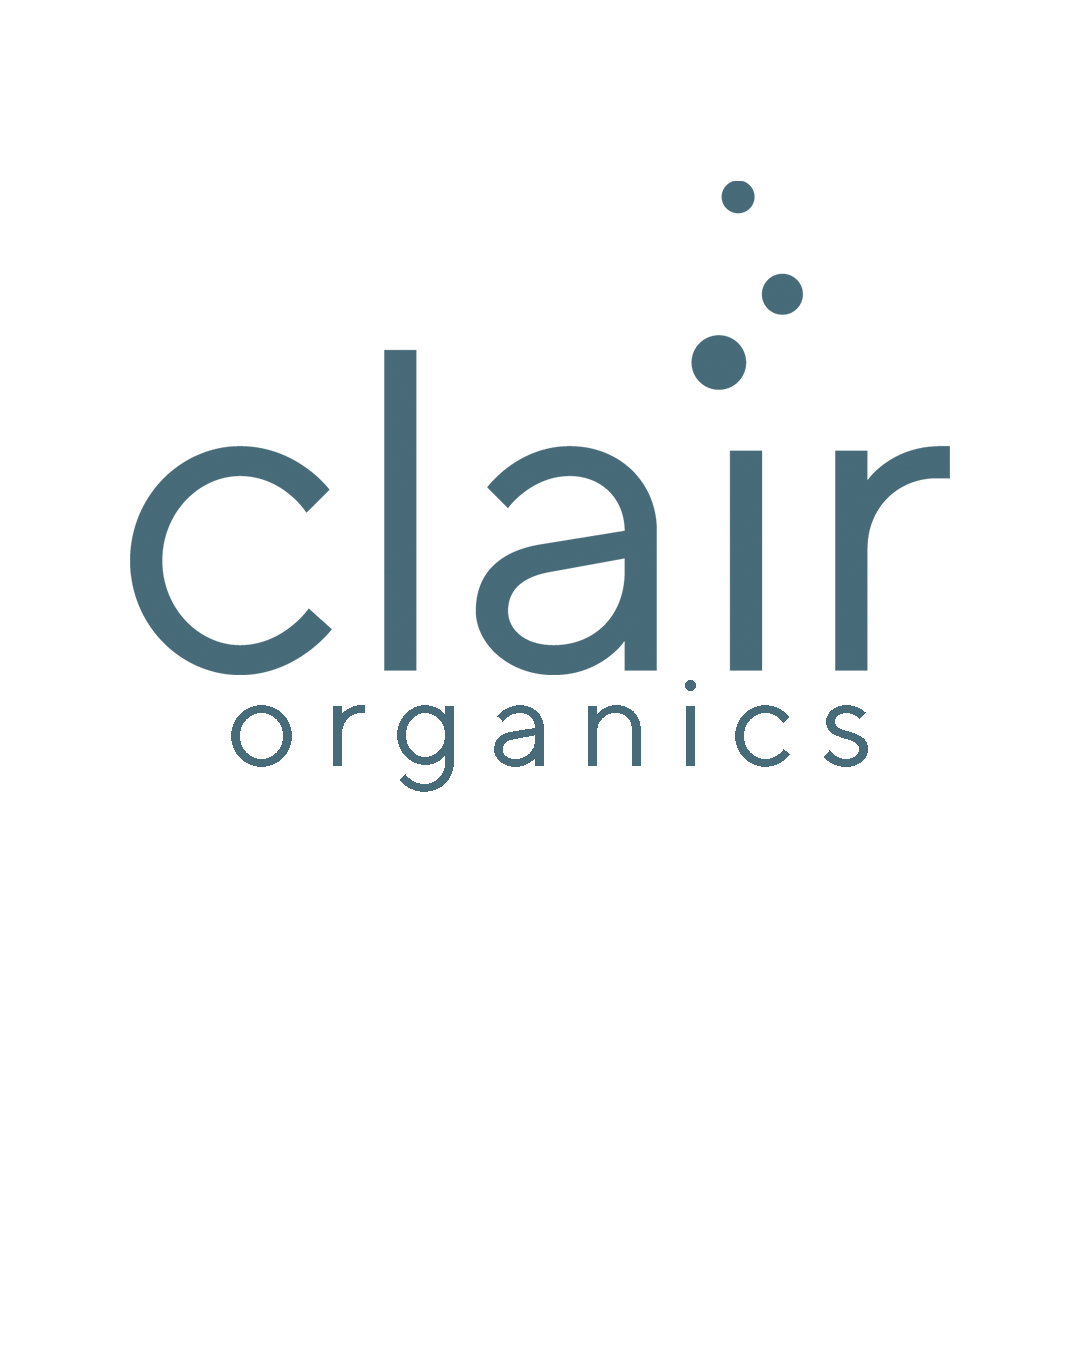 Clair Organics GmbH